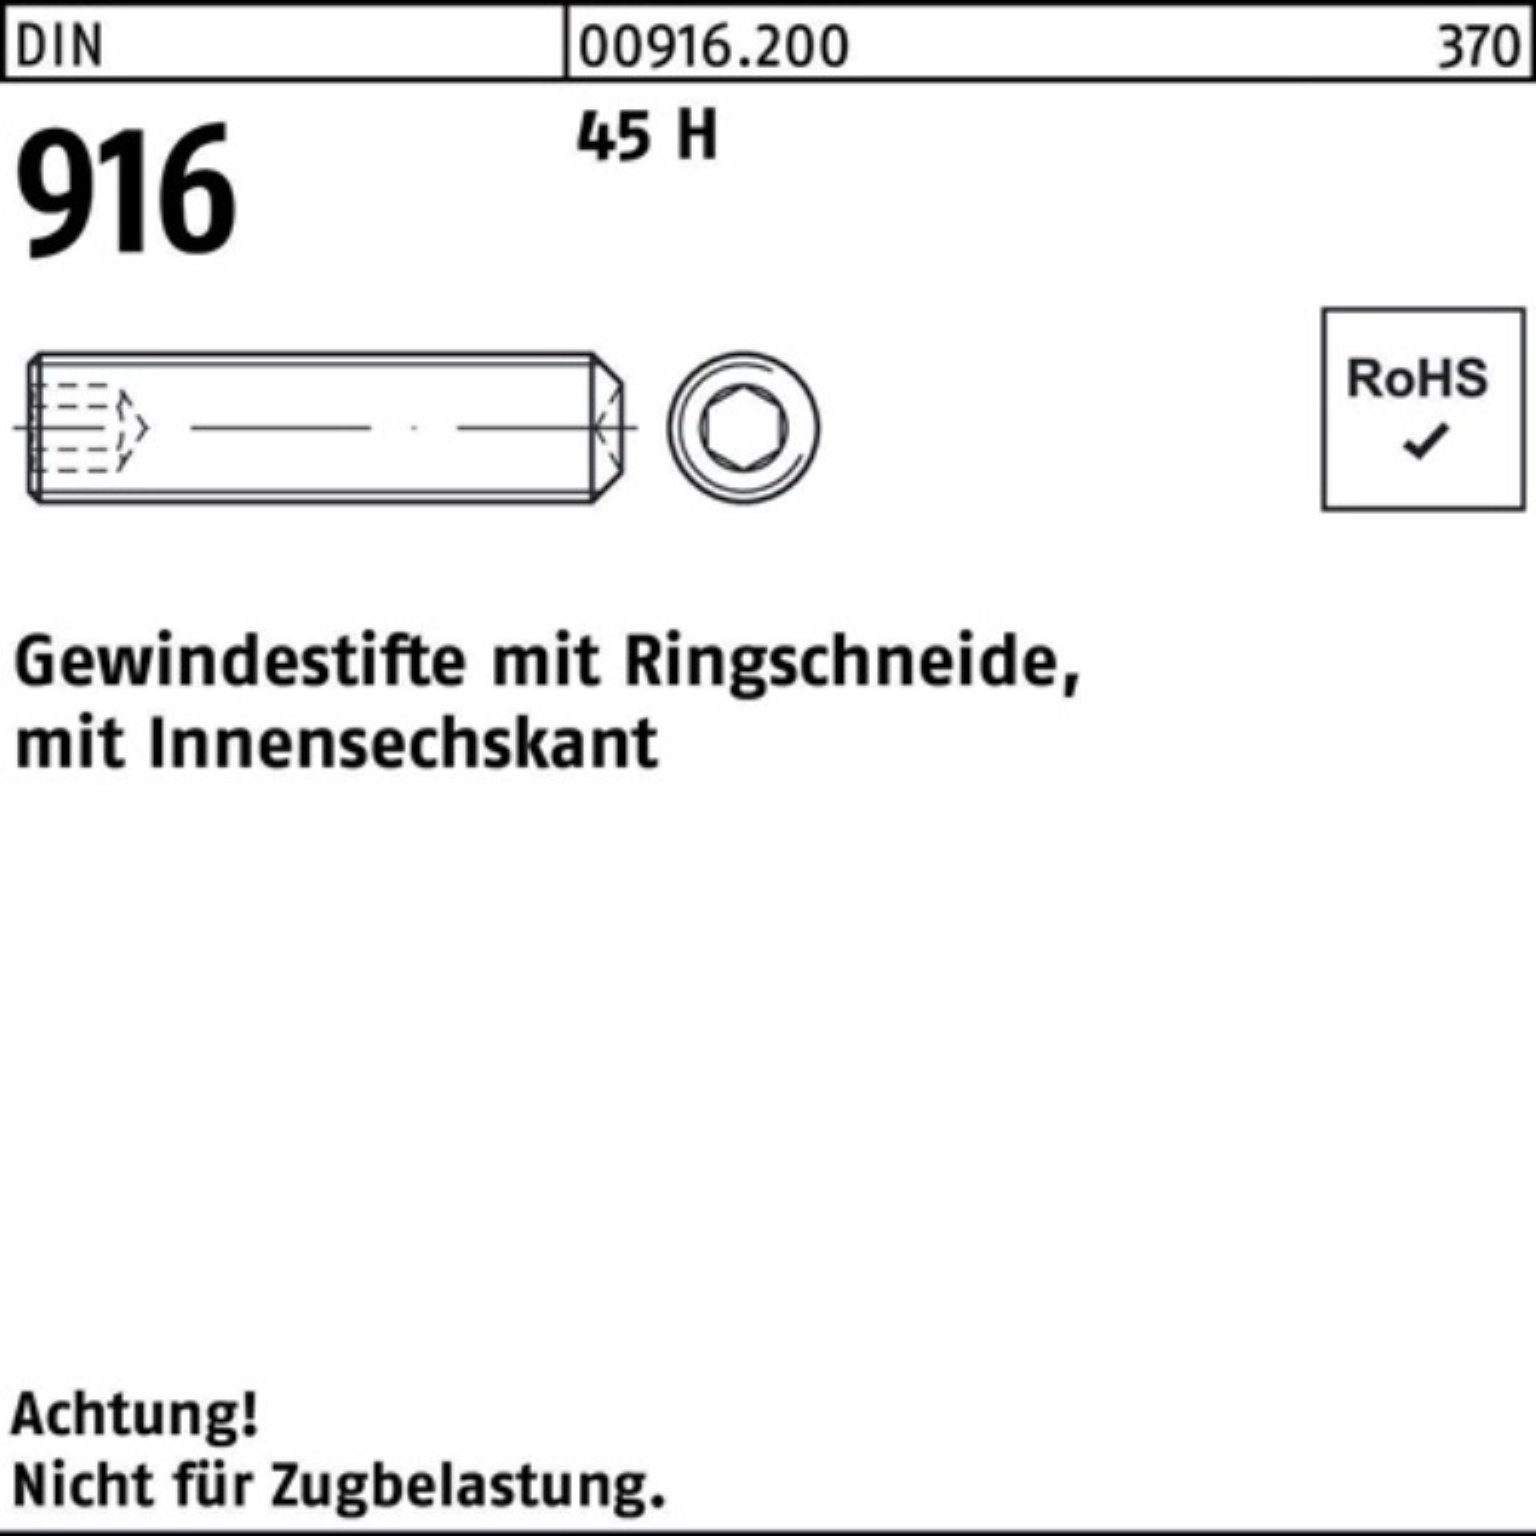 Reyher Gewindebolzen 100er Pack Gewindestift DIN 916 Ringschn./Innen-6kt M24x 50 45 H 25 St